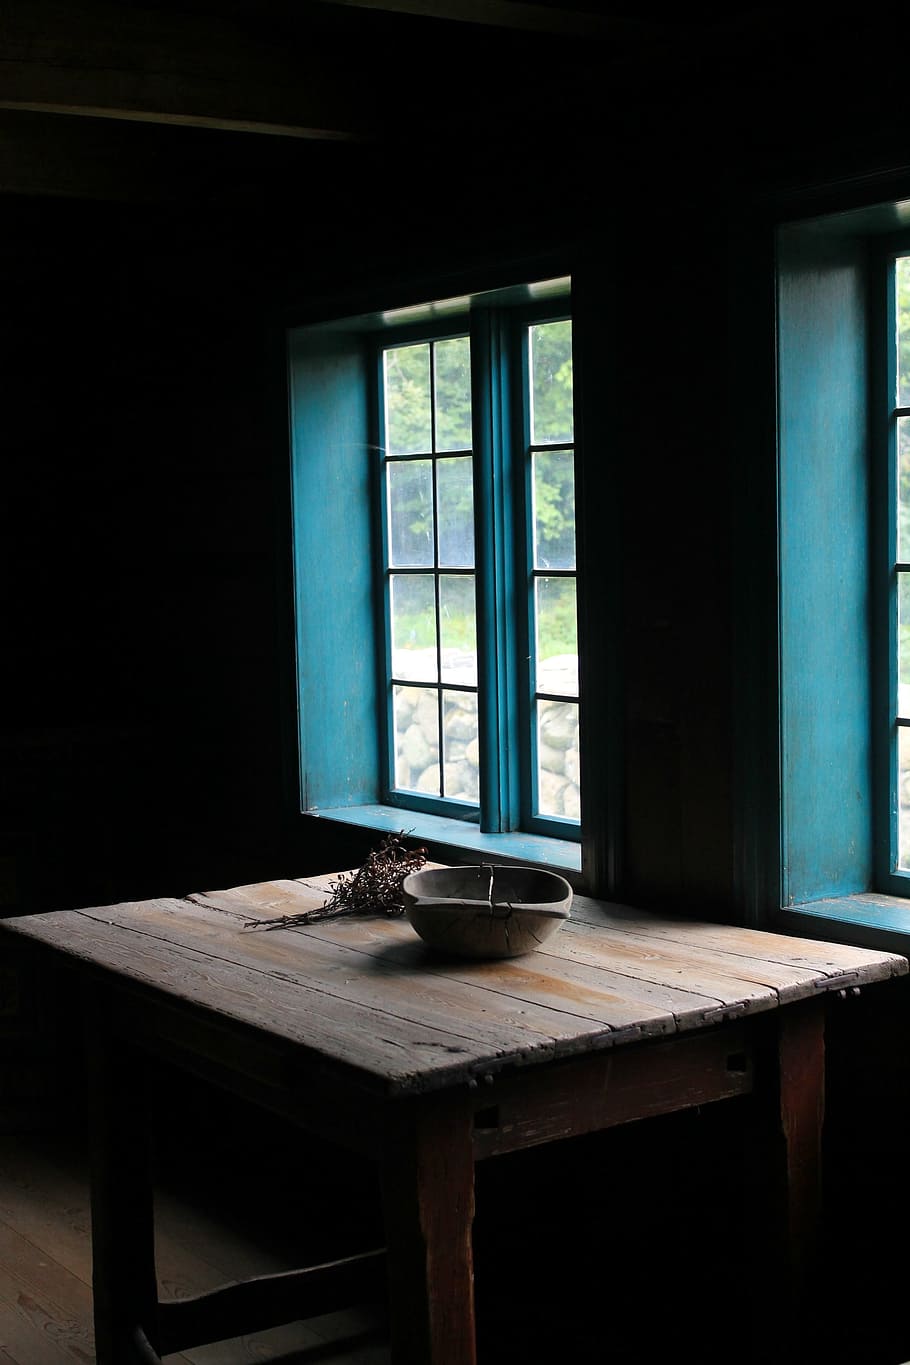 gelap, jendela, dinding, bingkai, meja, kayu, di dalam ruangan, tidak ada orang, bahan kayu, ruang domestik